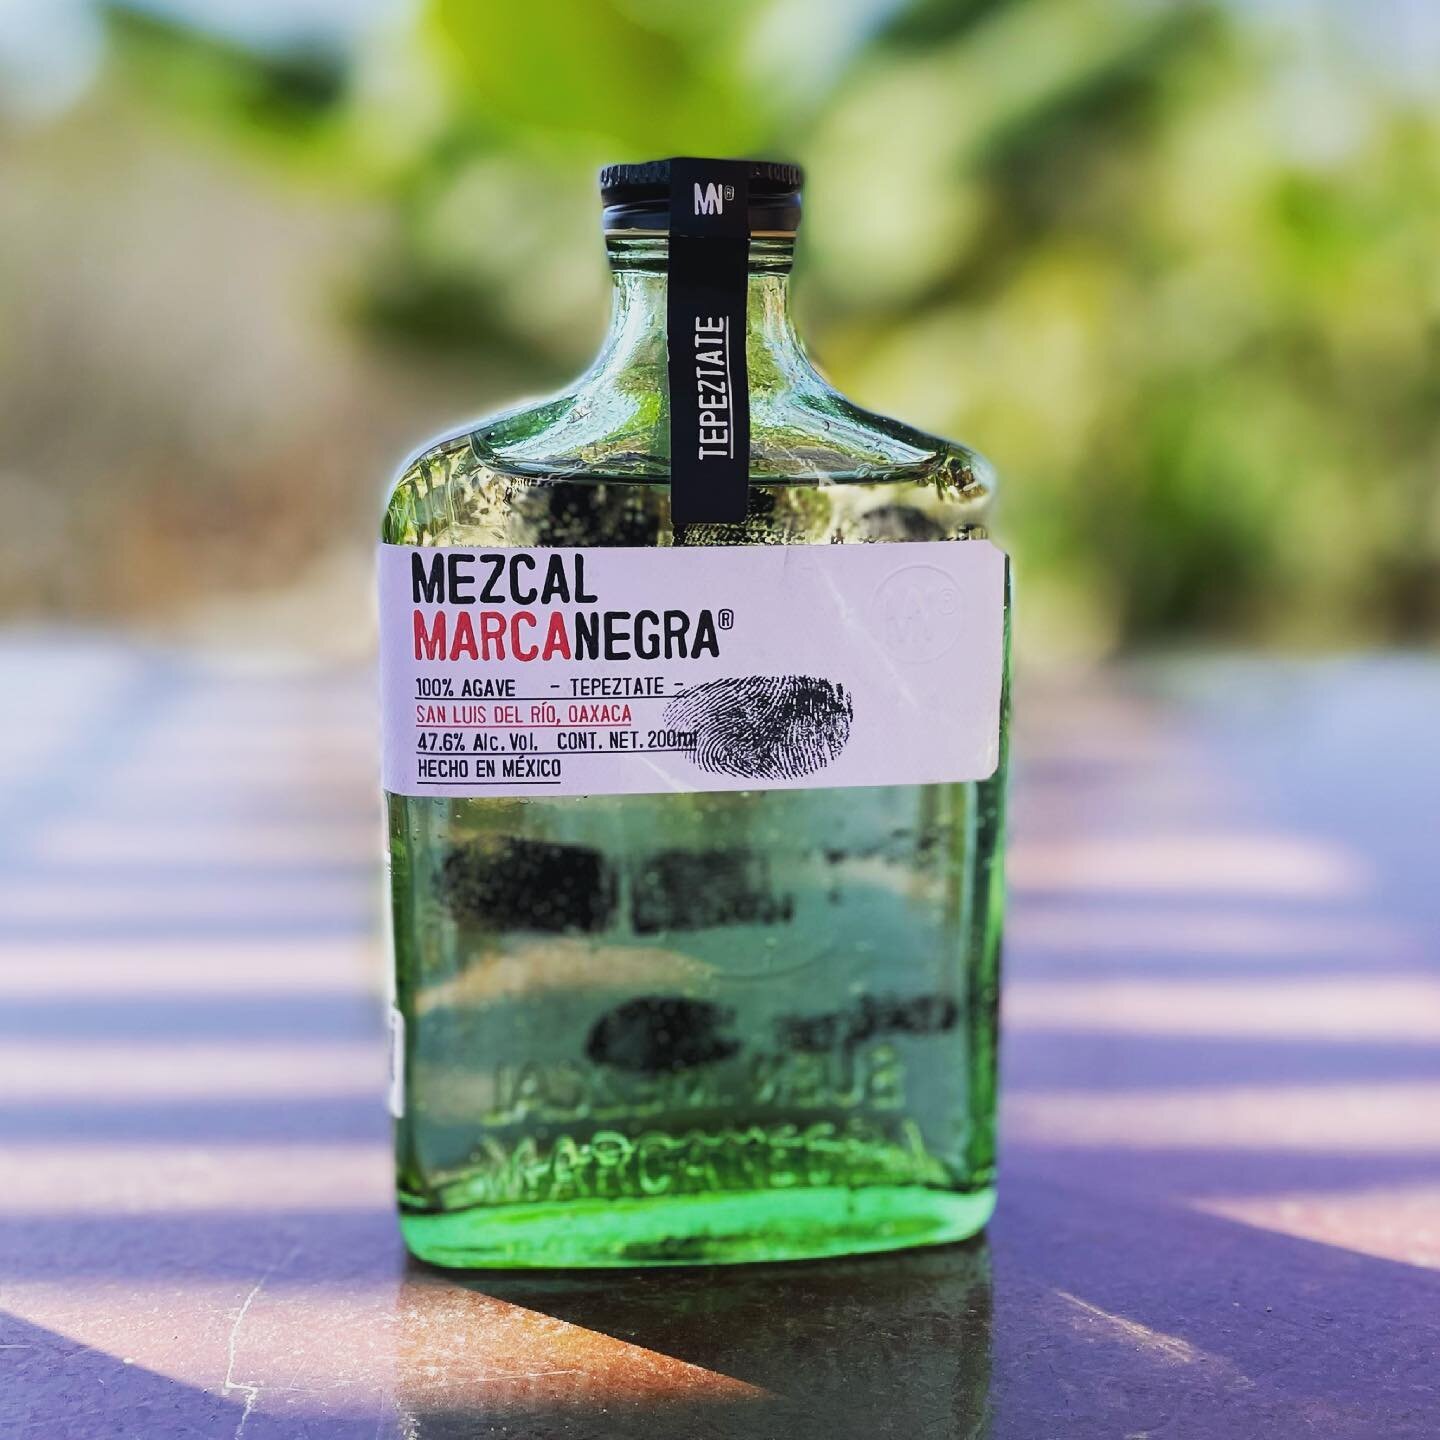 Mezcal Education
.
.
.
#packagingdesign #mezcal #designmexico #brandingdesign #alcoholpackaging #research #brandstory #brandingdesign